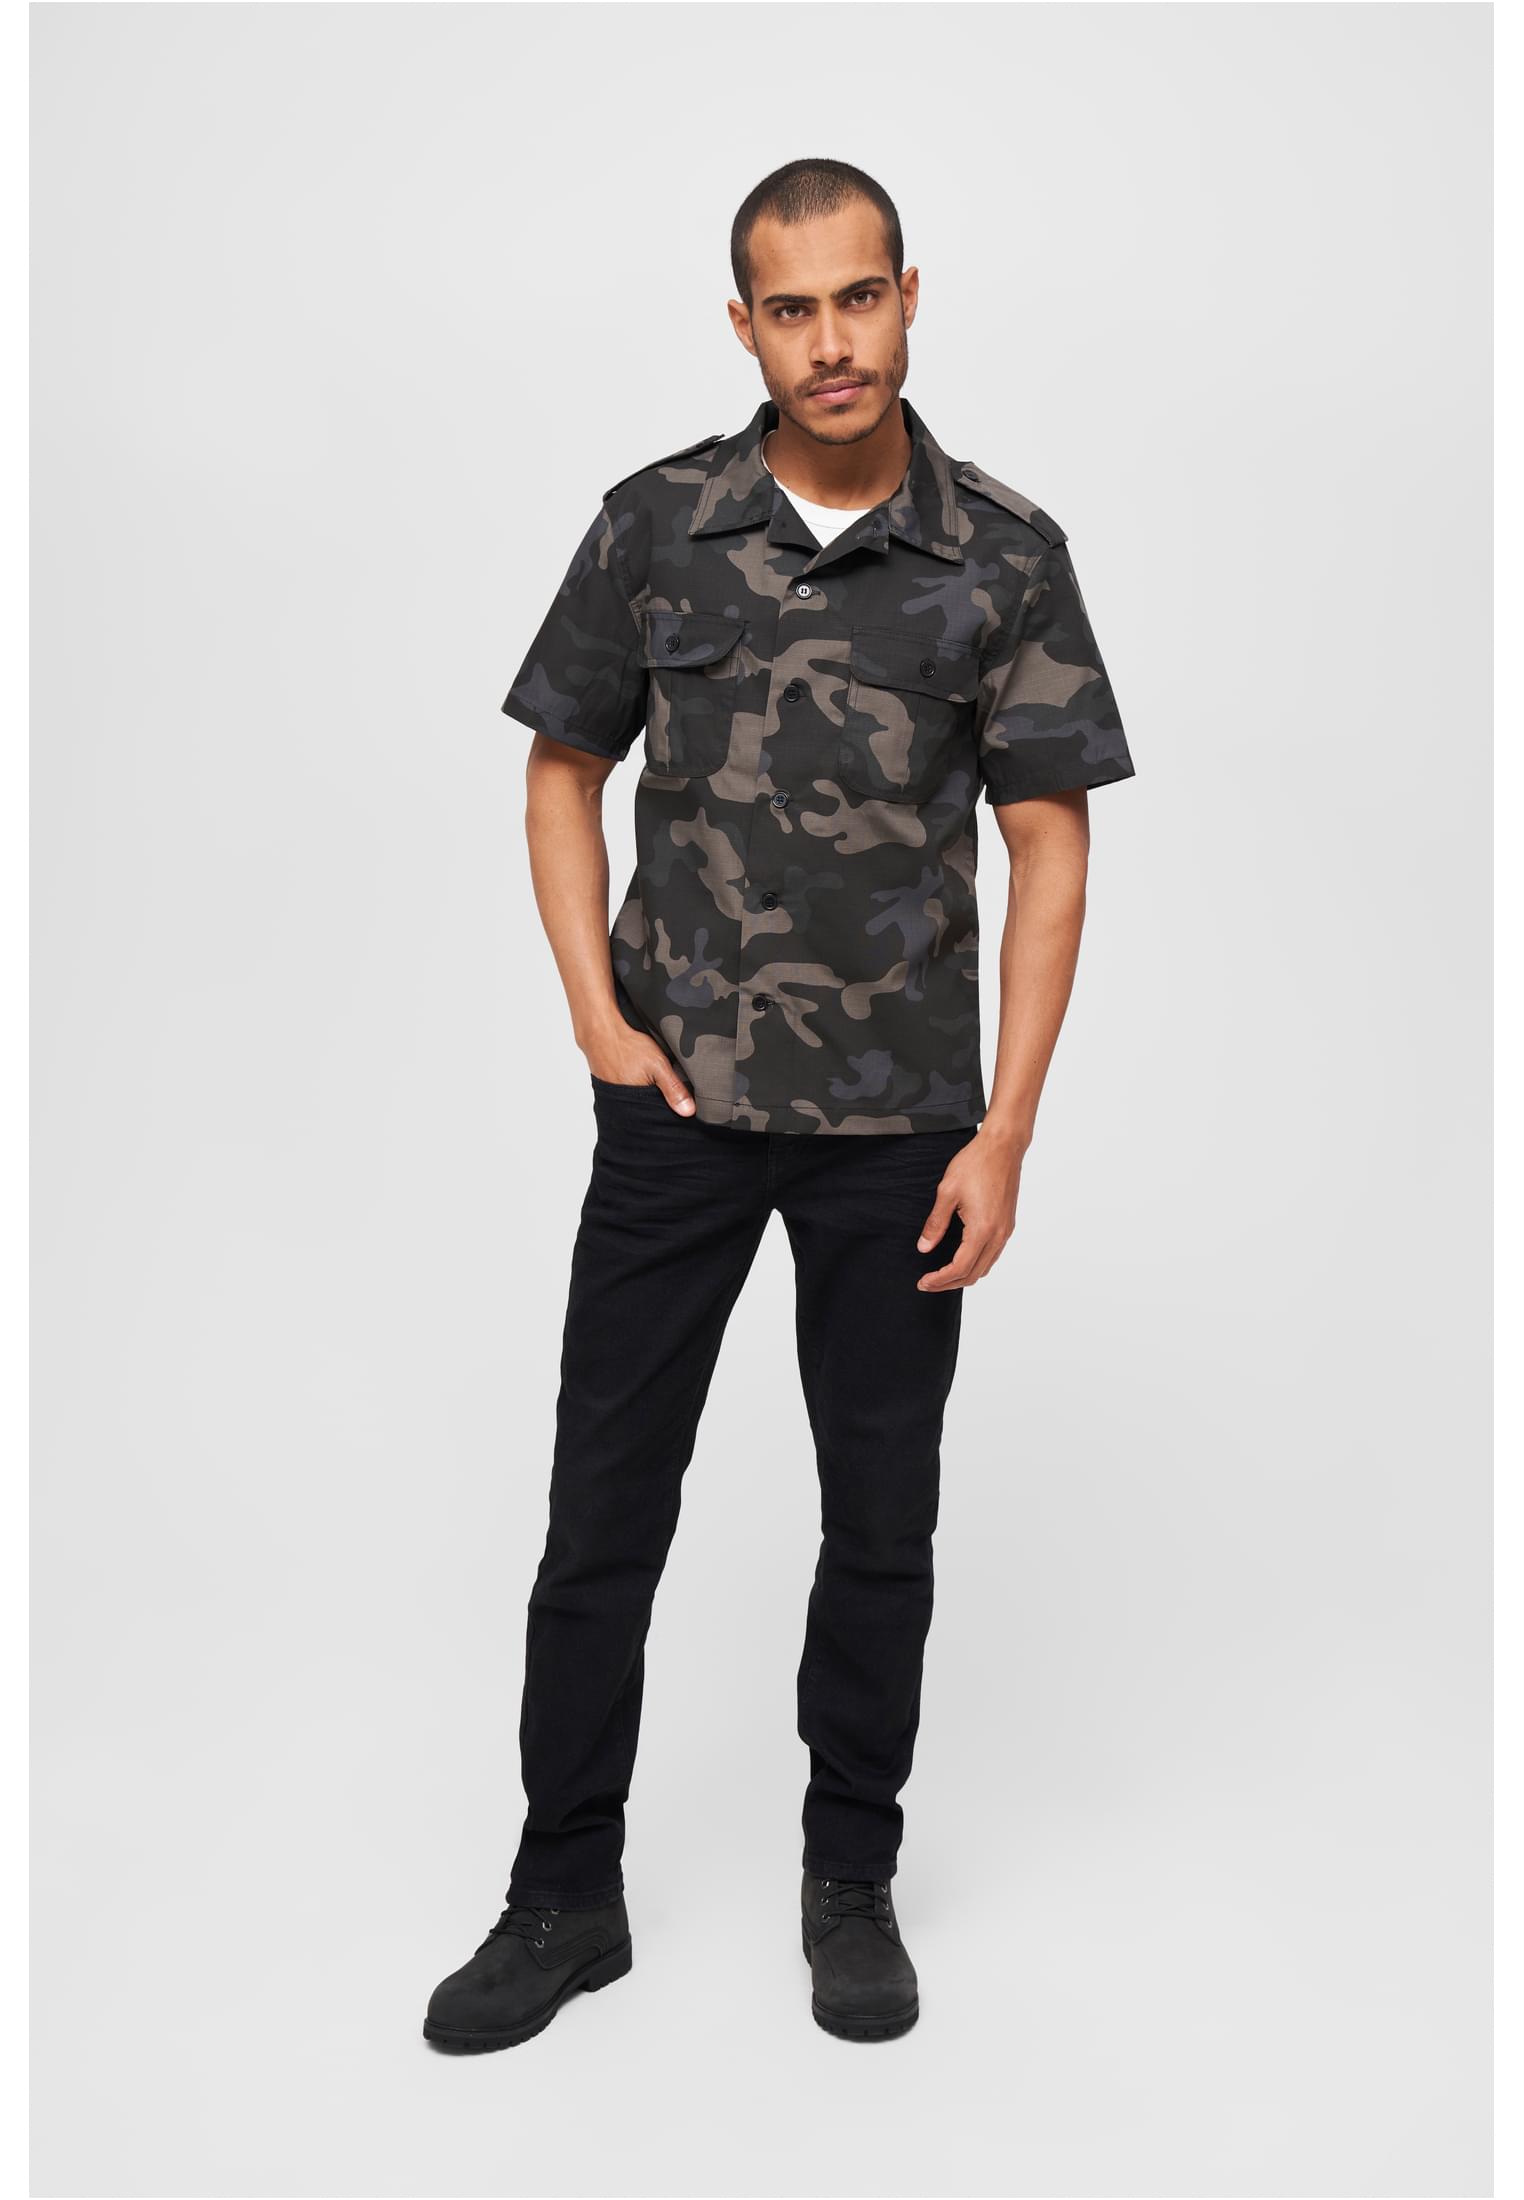 Hemden US Shirt Ripstop shortsleeve in Farbe dark camo